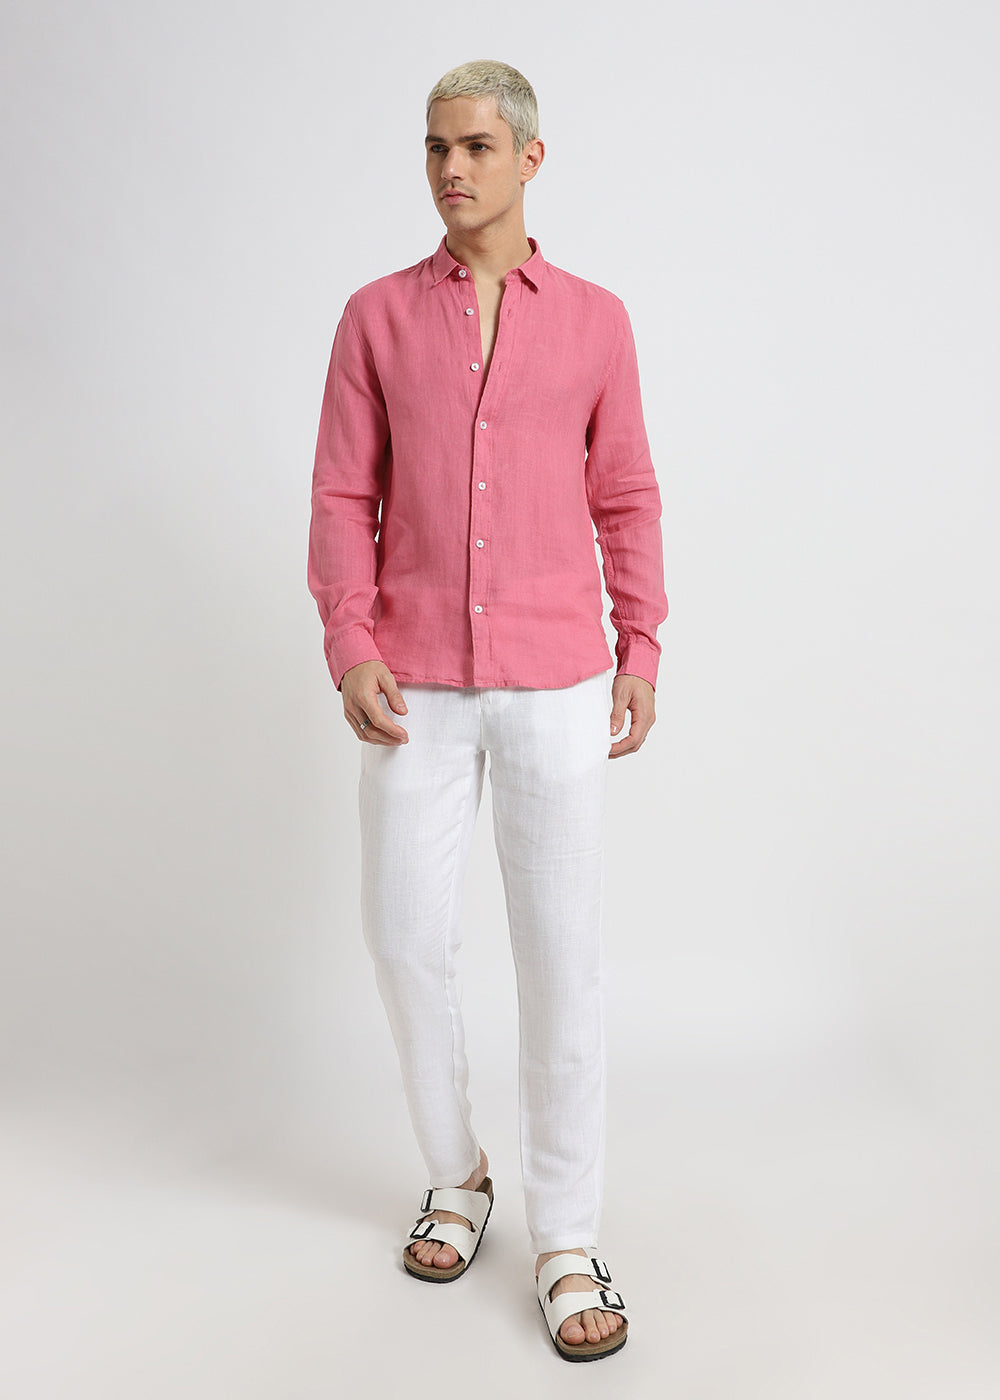 Carmine Pink Pure Irish Linen Shirt